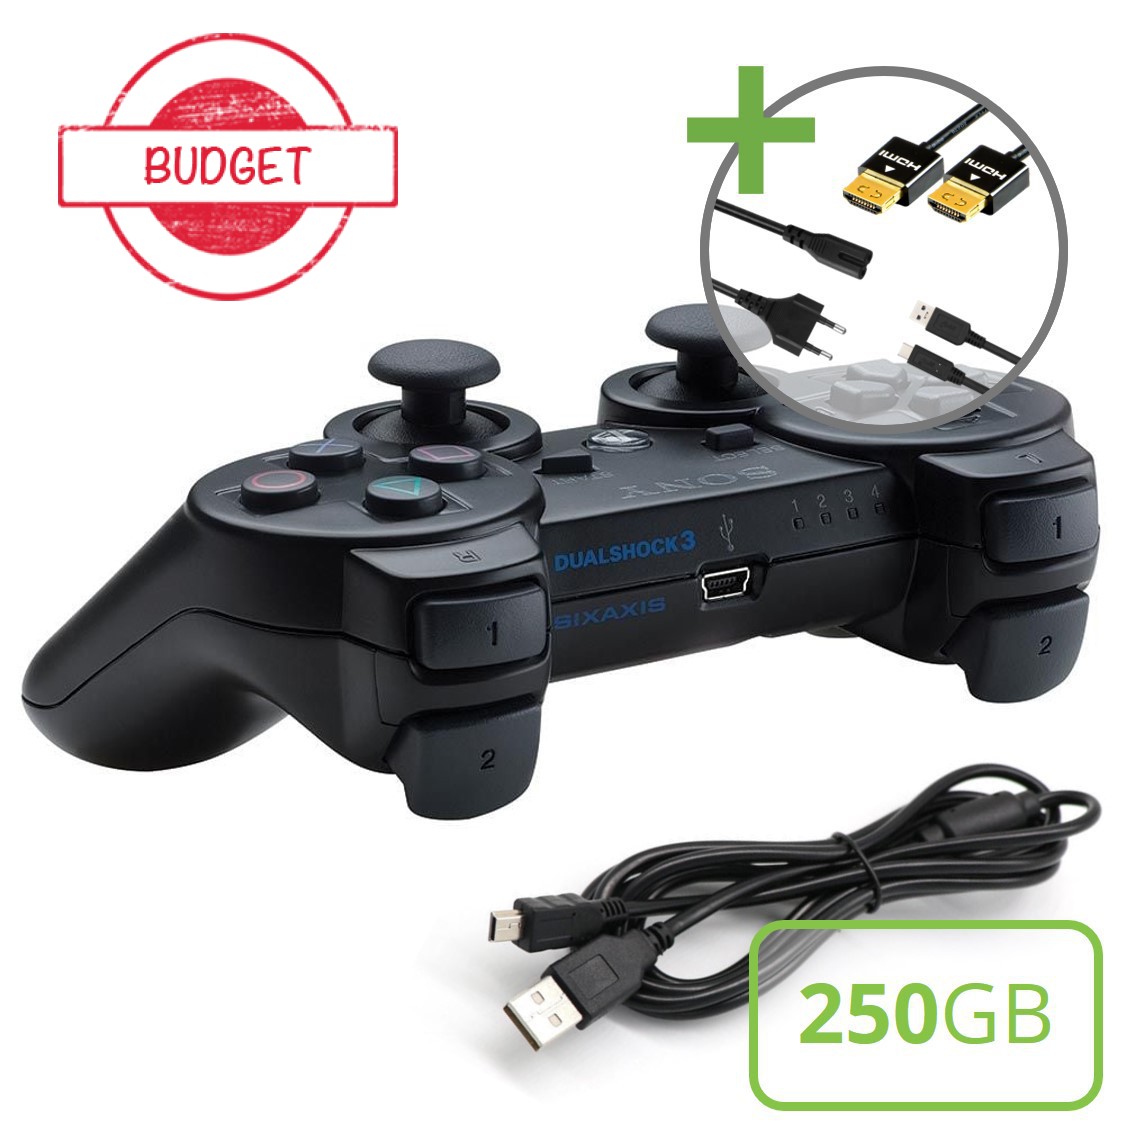 Sony PlayStation 3 Slim (250GB) Starter Pack - DualShock Edition - Budget - Playstation 3 Hardware - 4